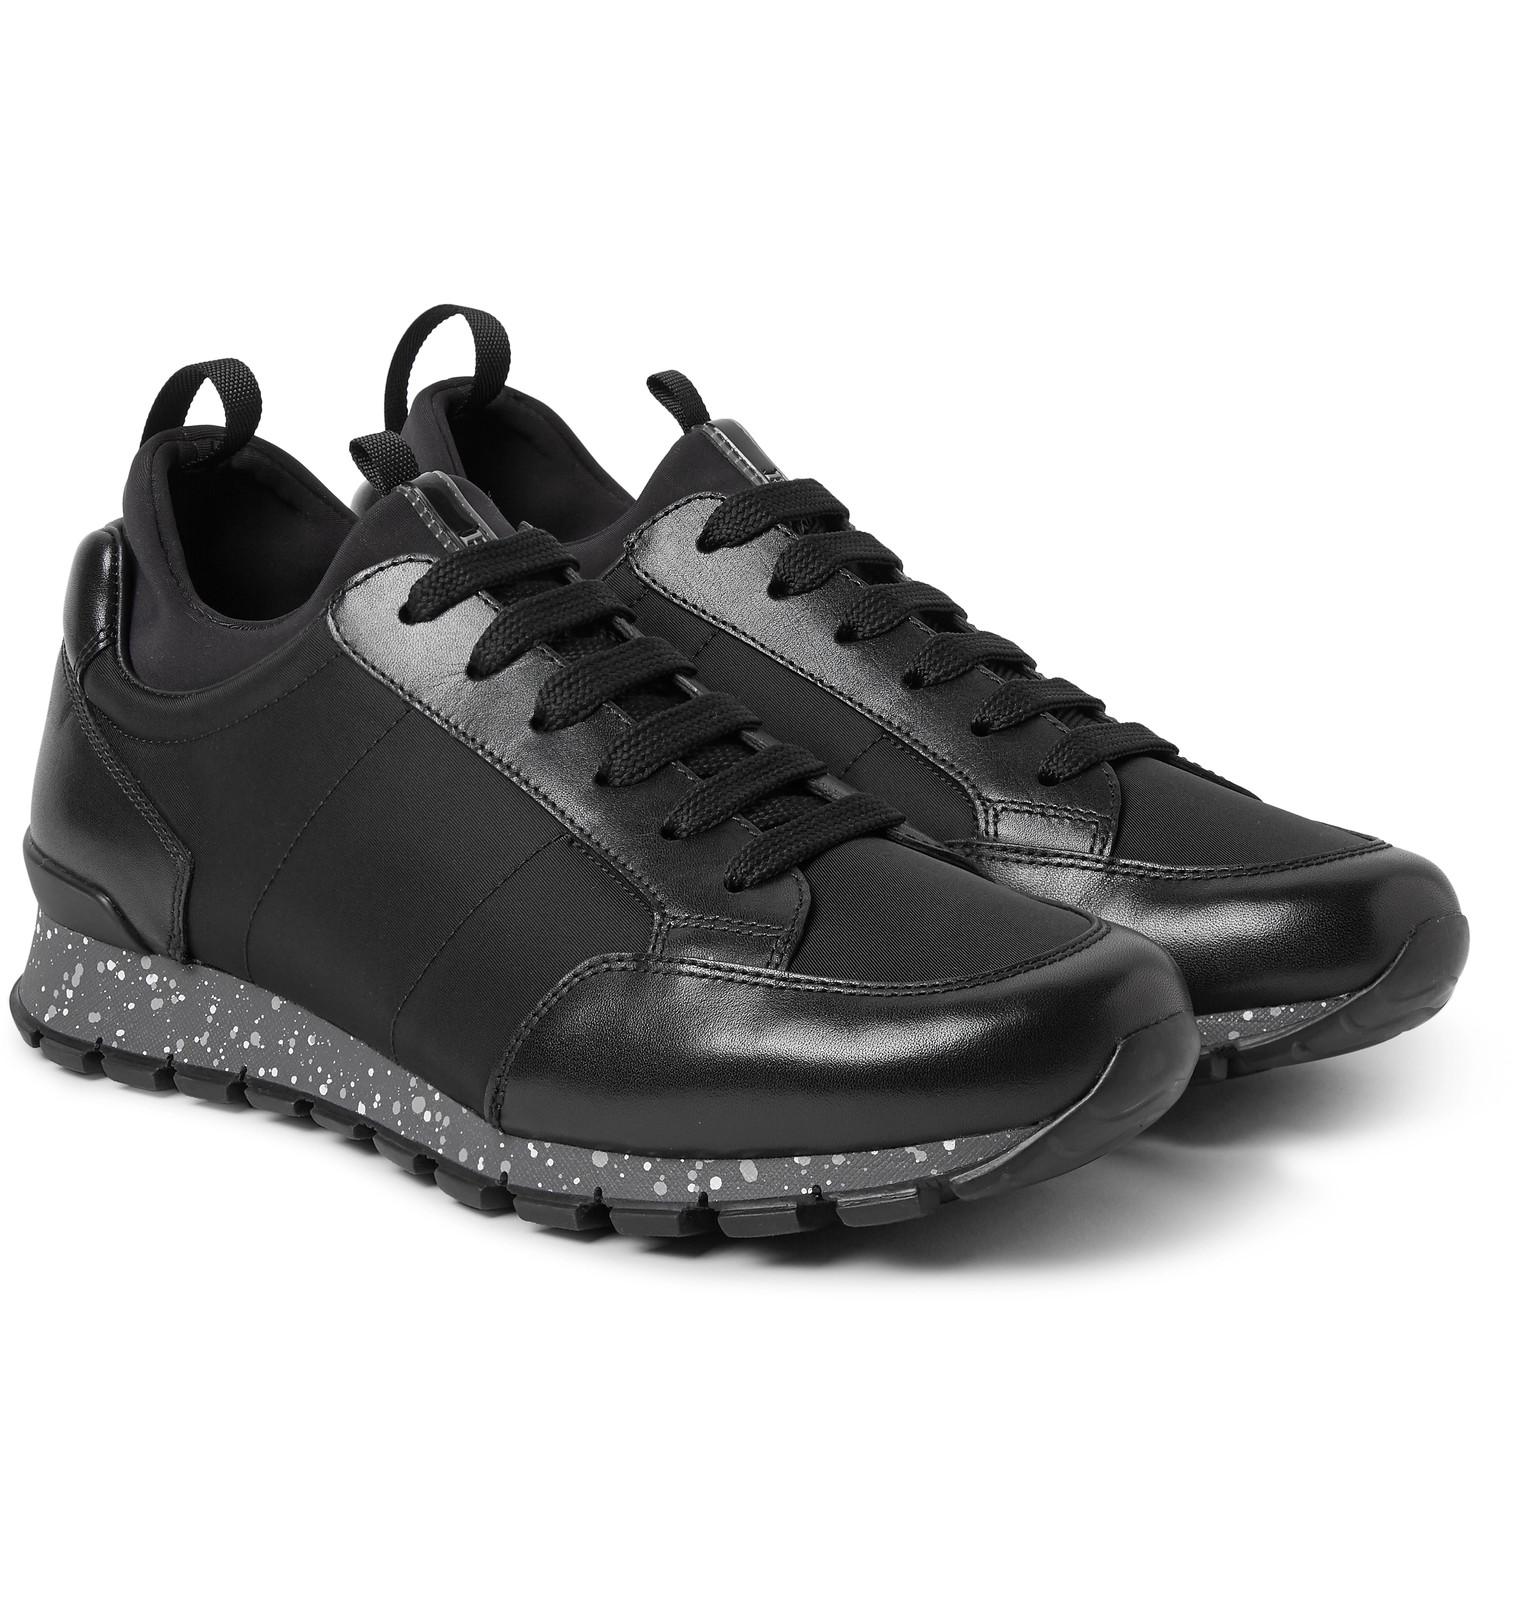 Prada Leather Sneaker in Black for Men - Lyst